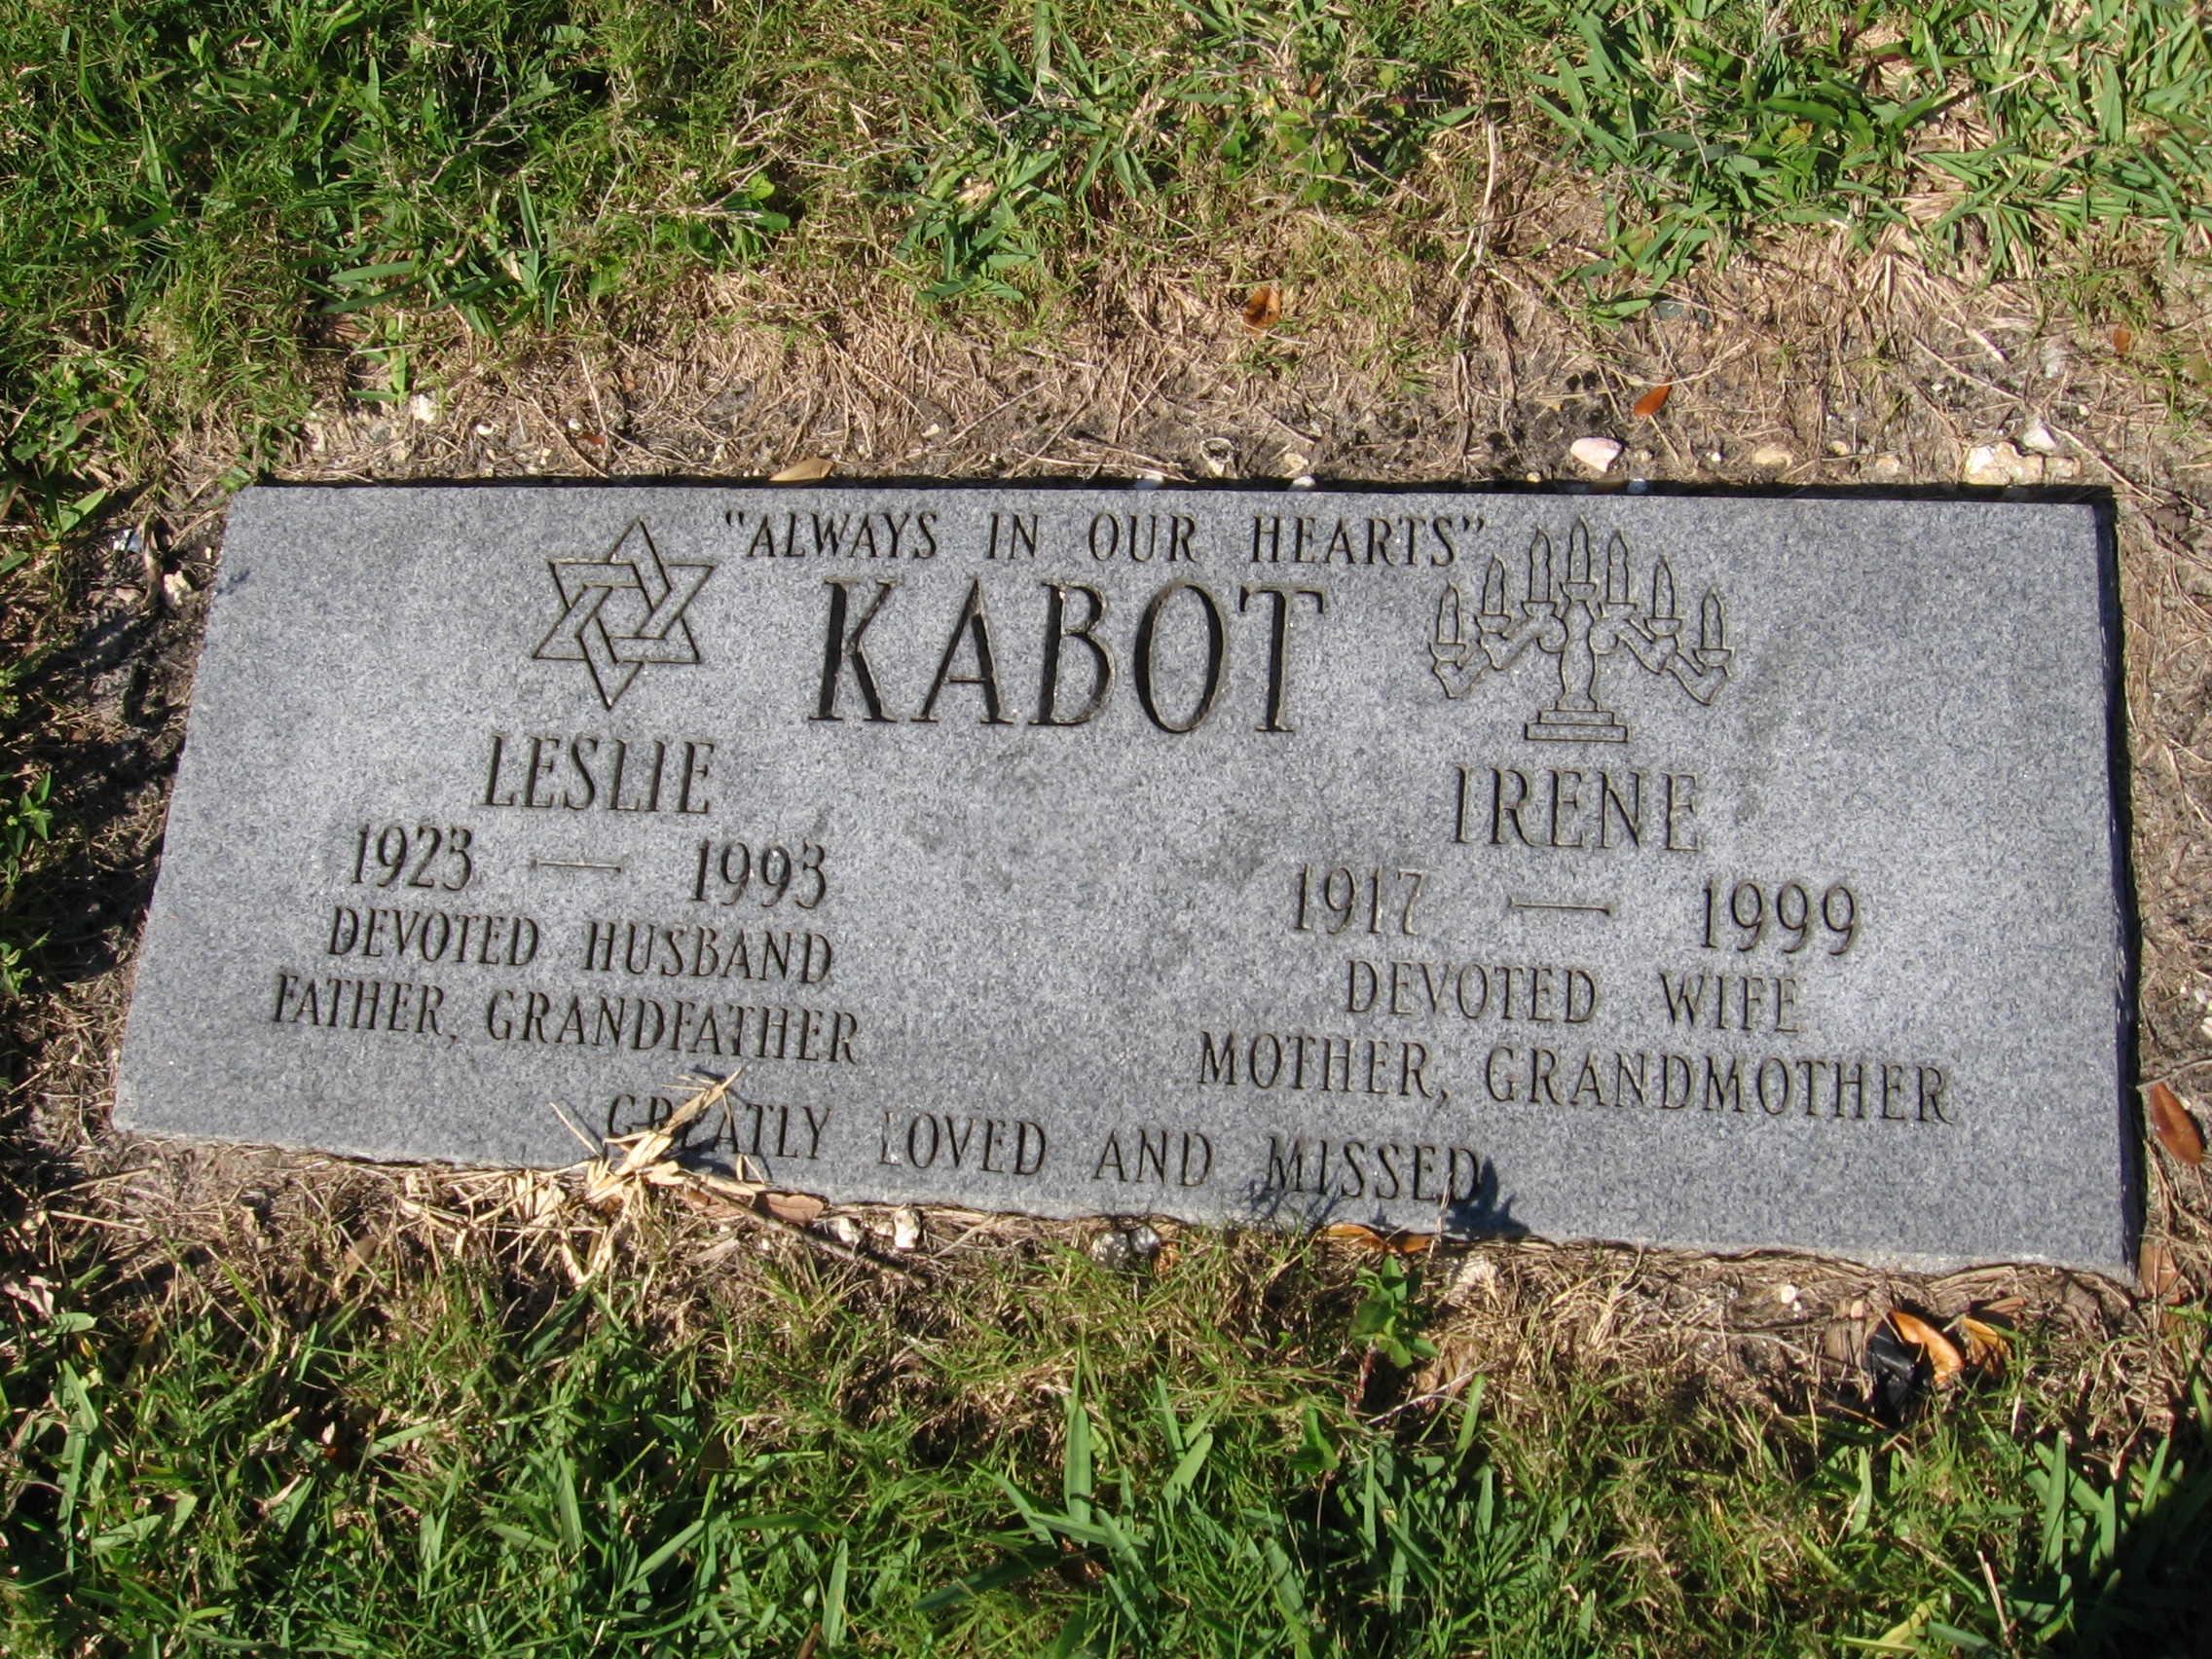 Irene Kabot